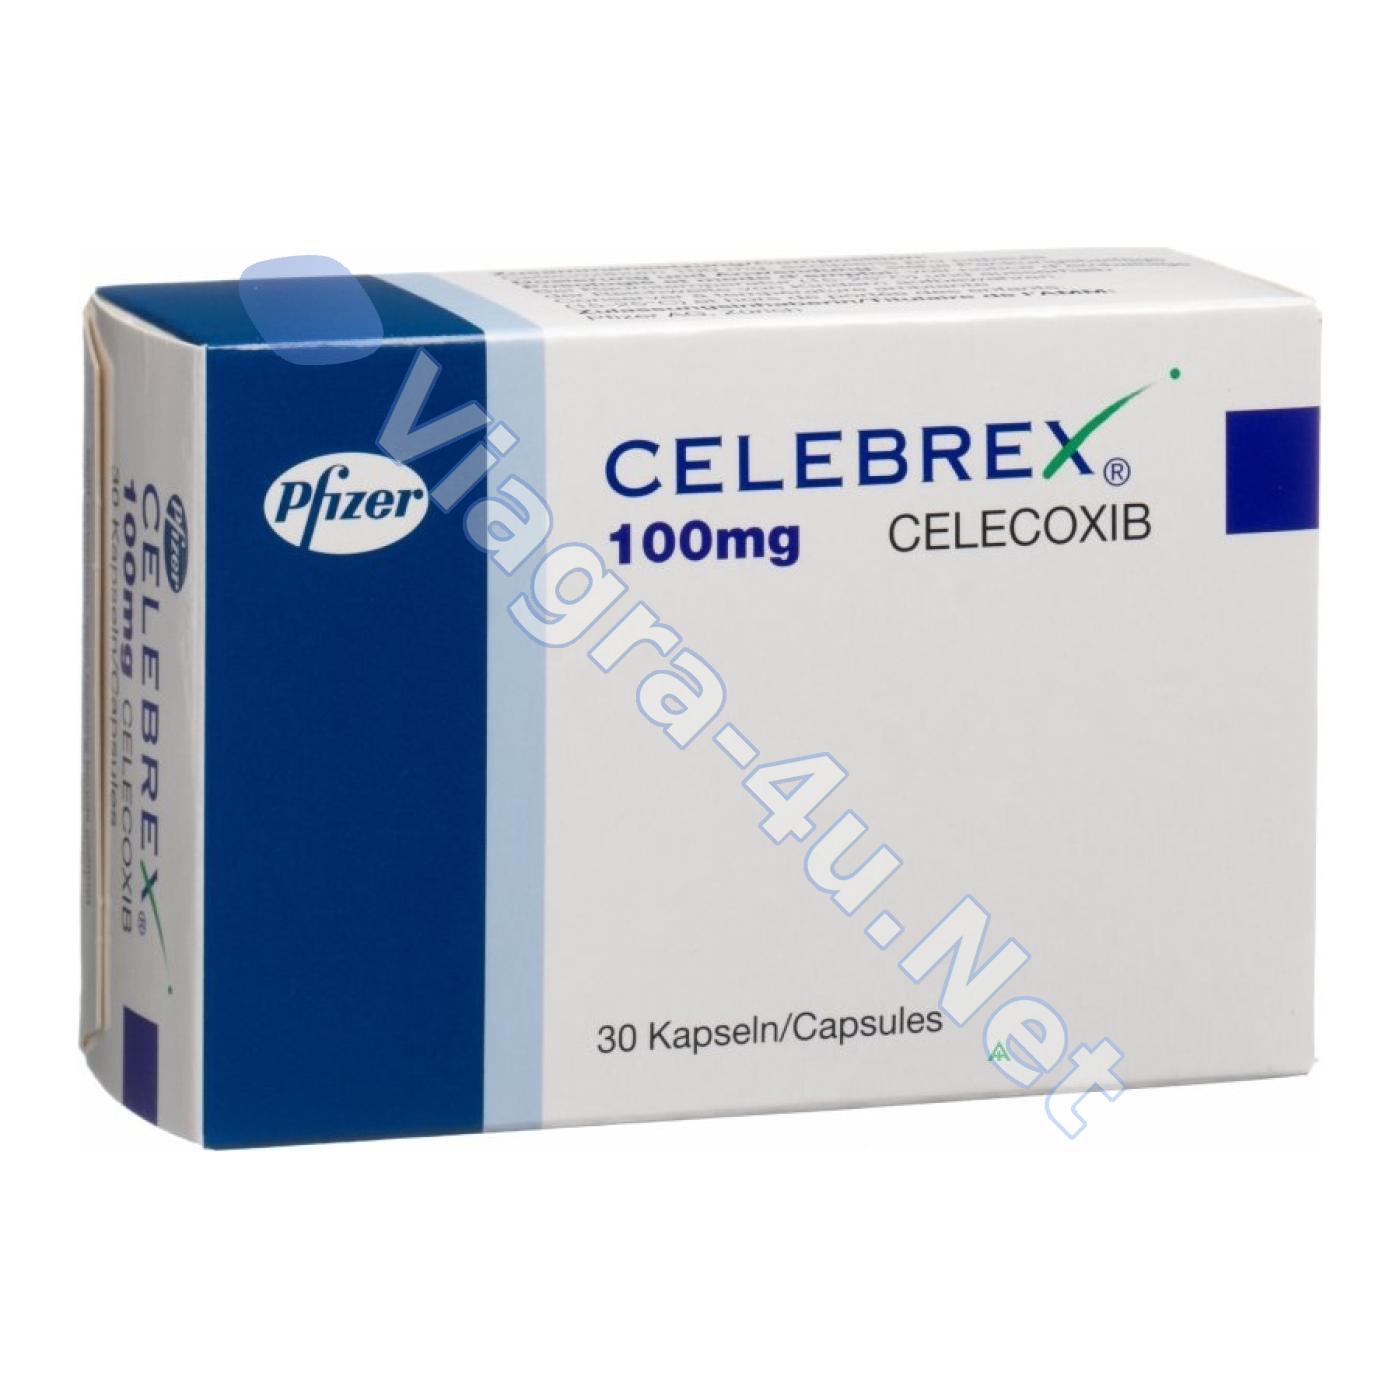 does celebrex help reduce inflammation